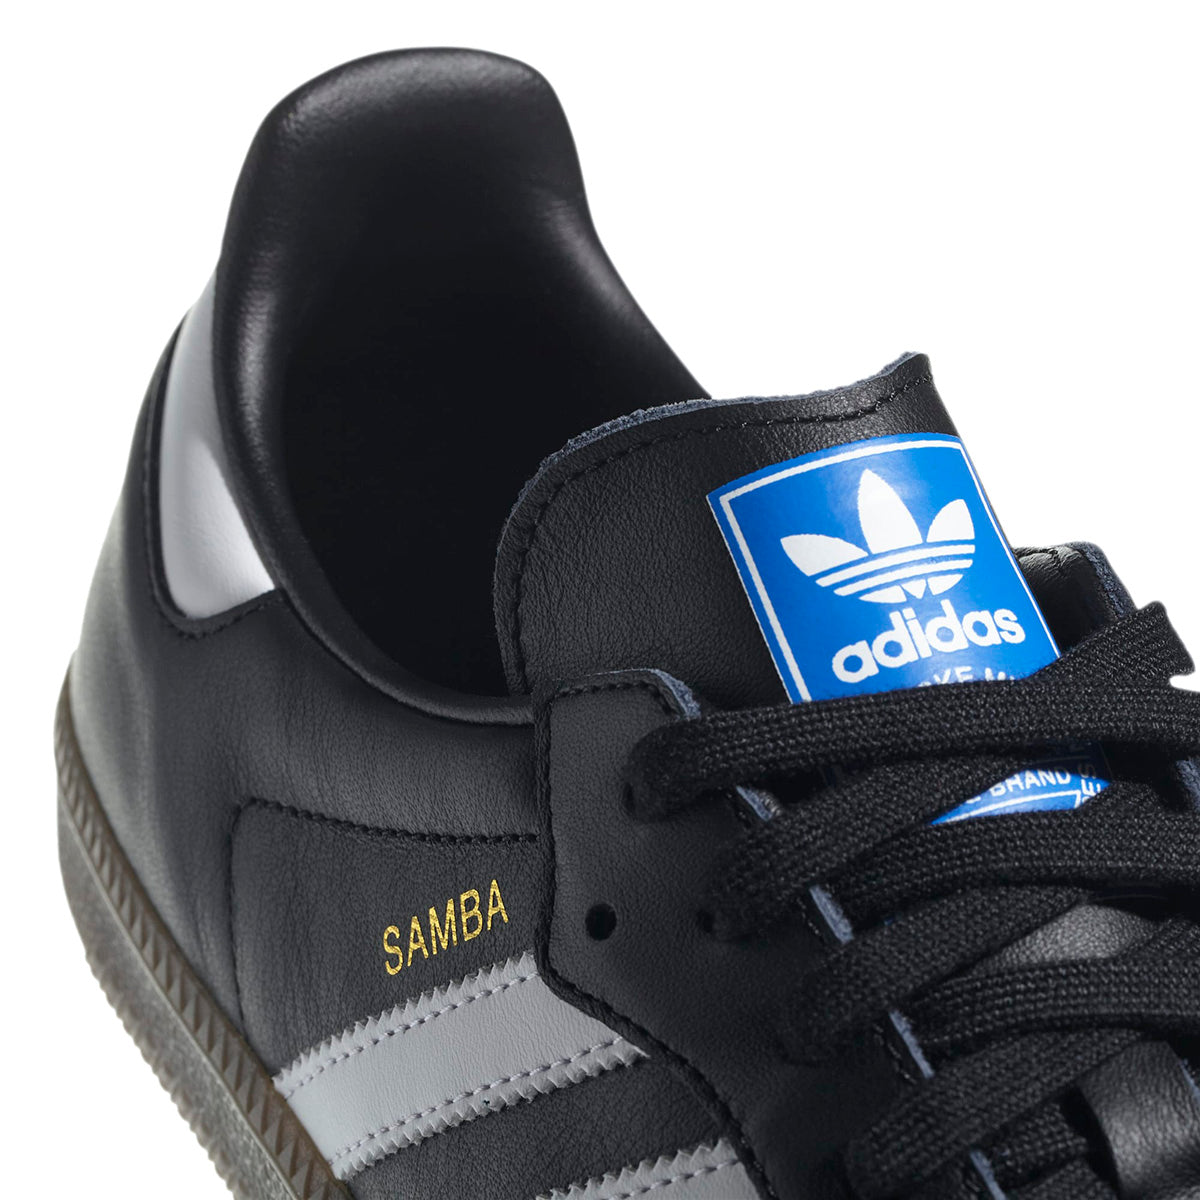 ADIDAS SAMBA OG Adidas Samba OG "Core Black / Running White / Gum" [B75807]